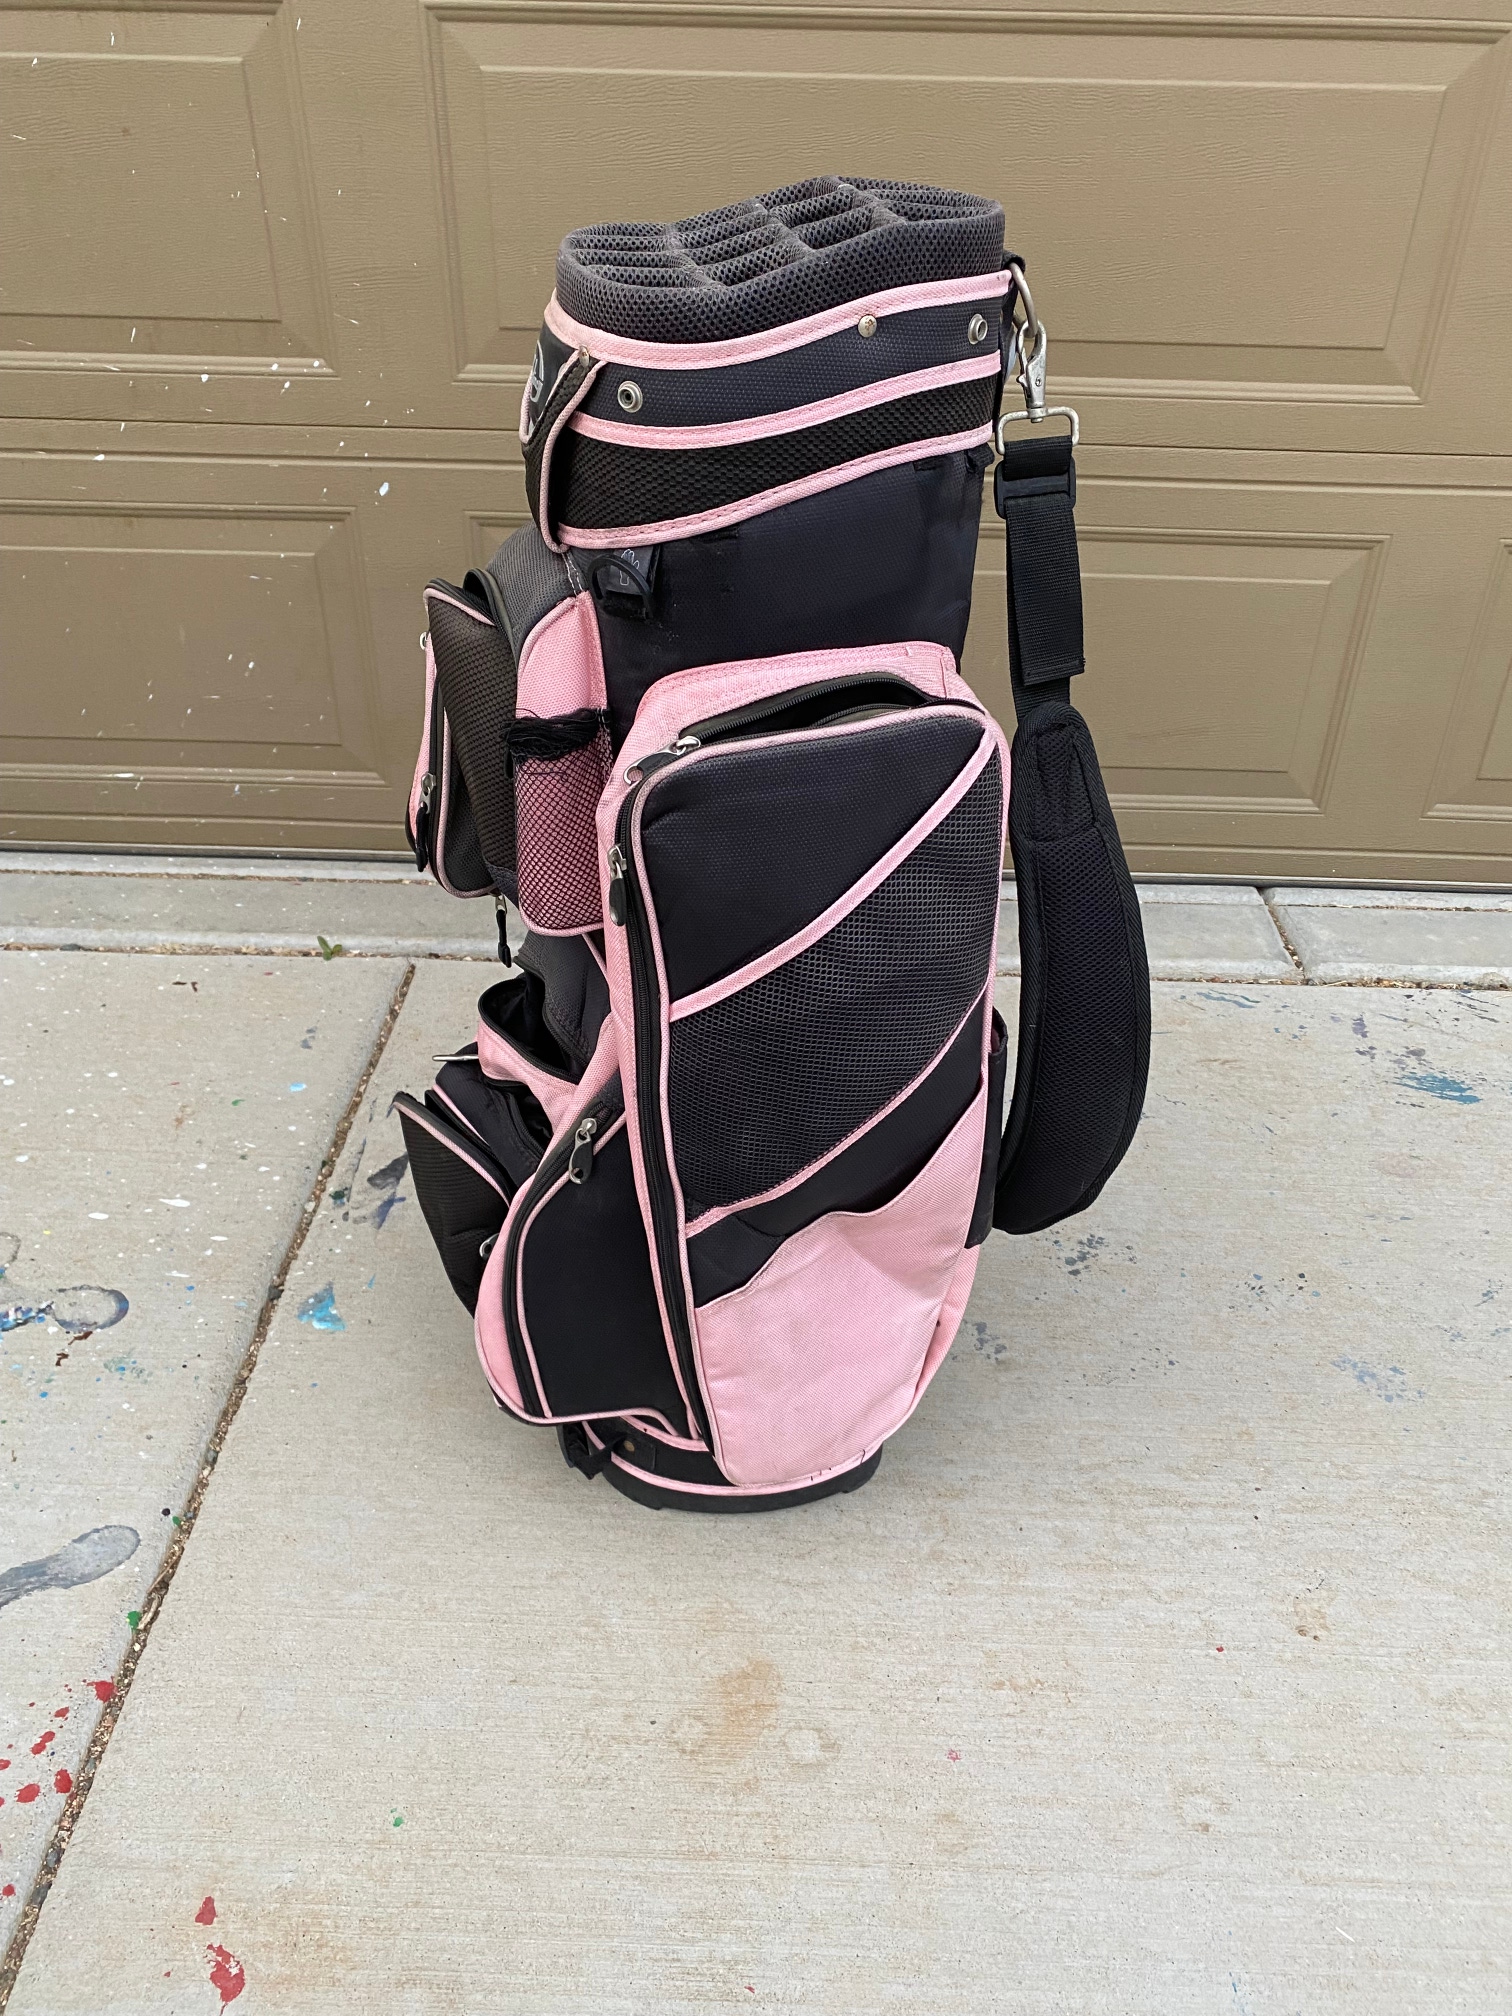 Used Calina Women's golf Bag